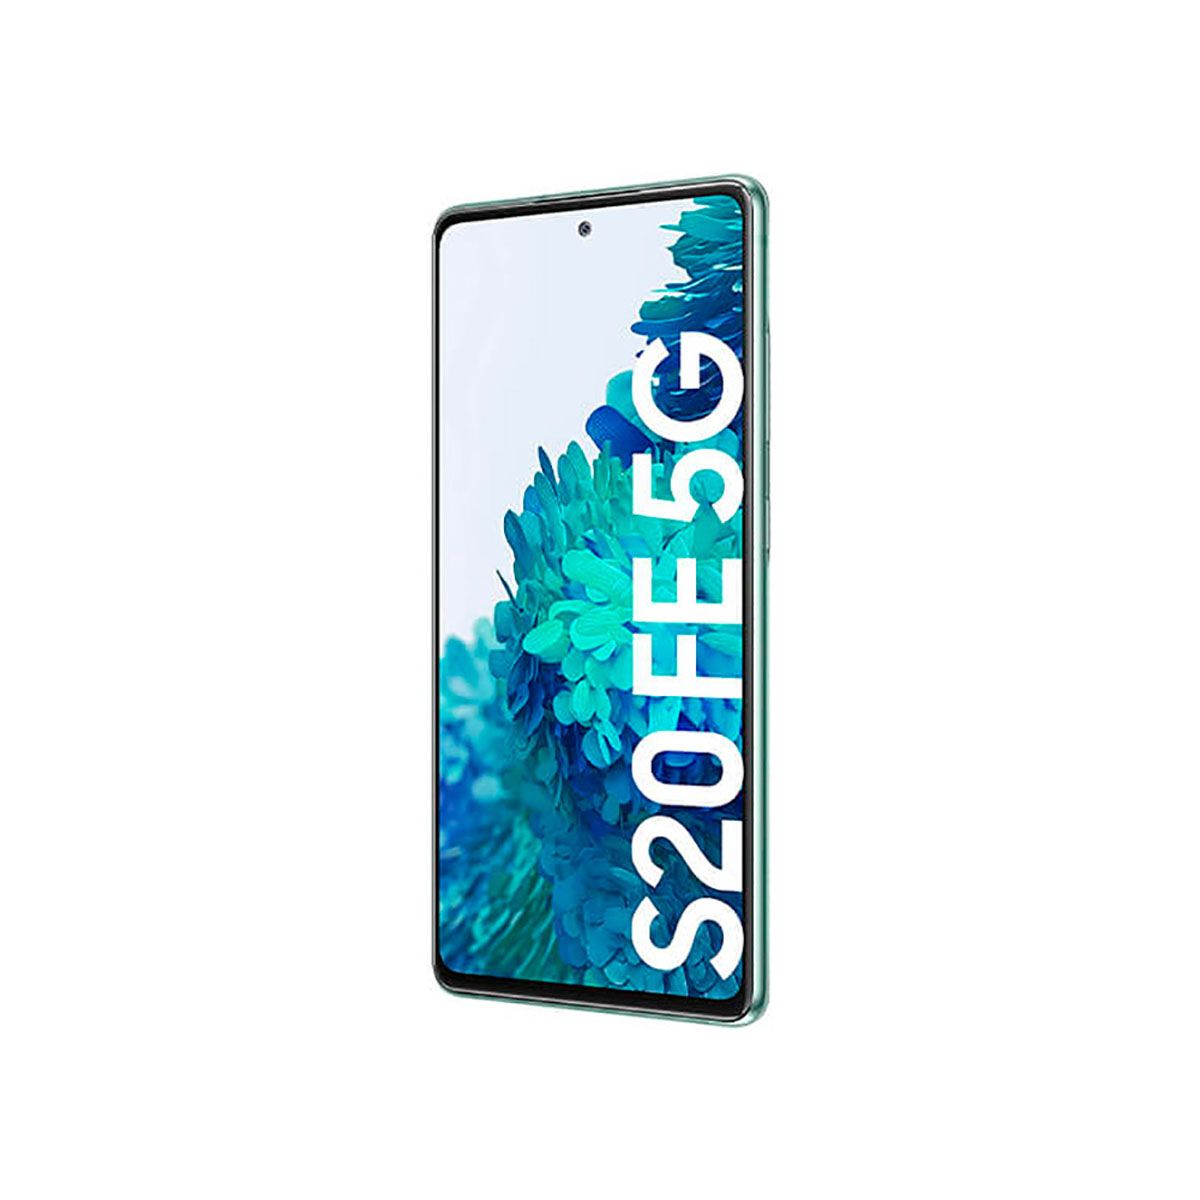 Samsung Galaxy S20 FE 5G 6Go/128Go Vert (Cloud Mint) Double SIM G781B